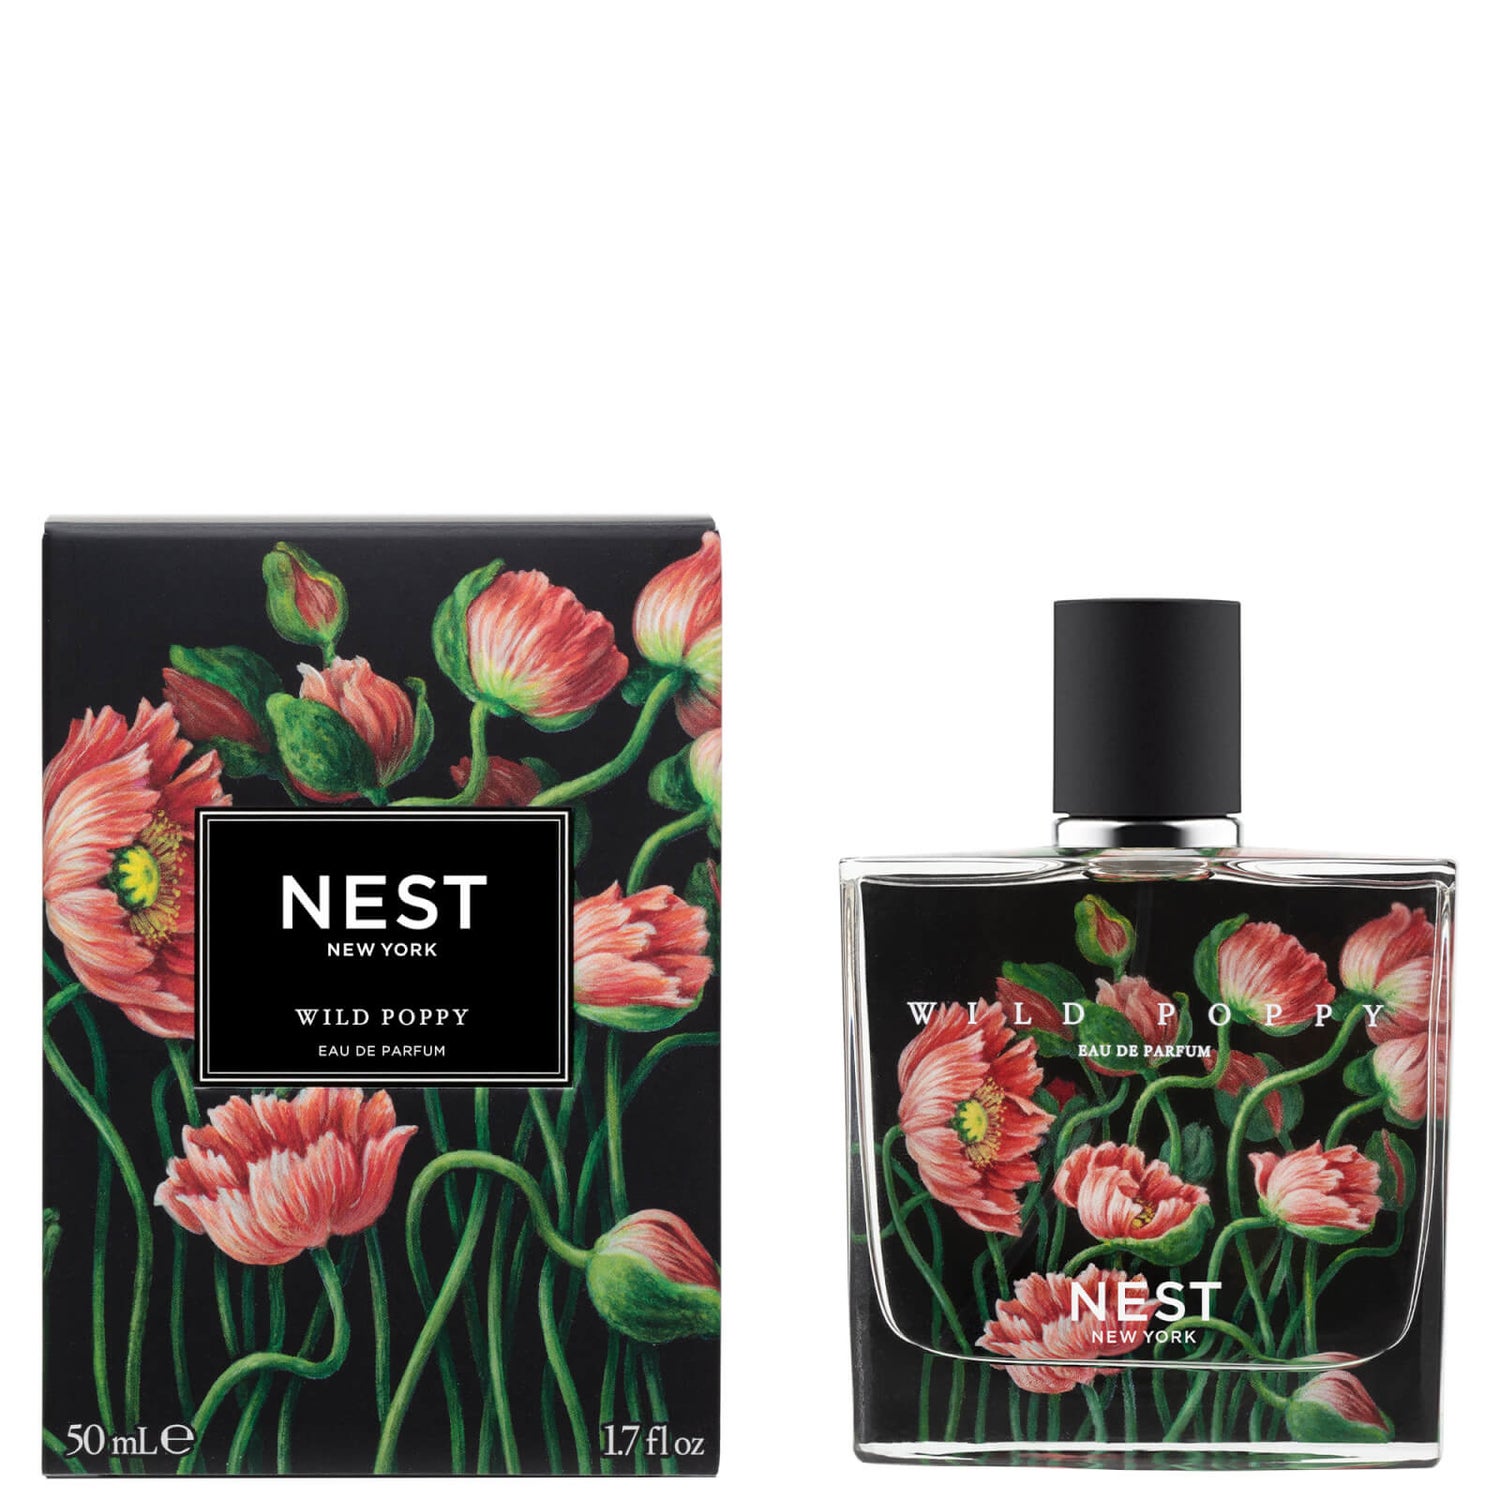 NEST New York Wild Poppy Eau de Parfum 50ml